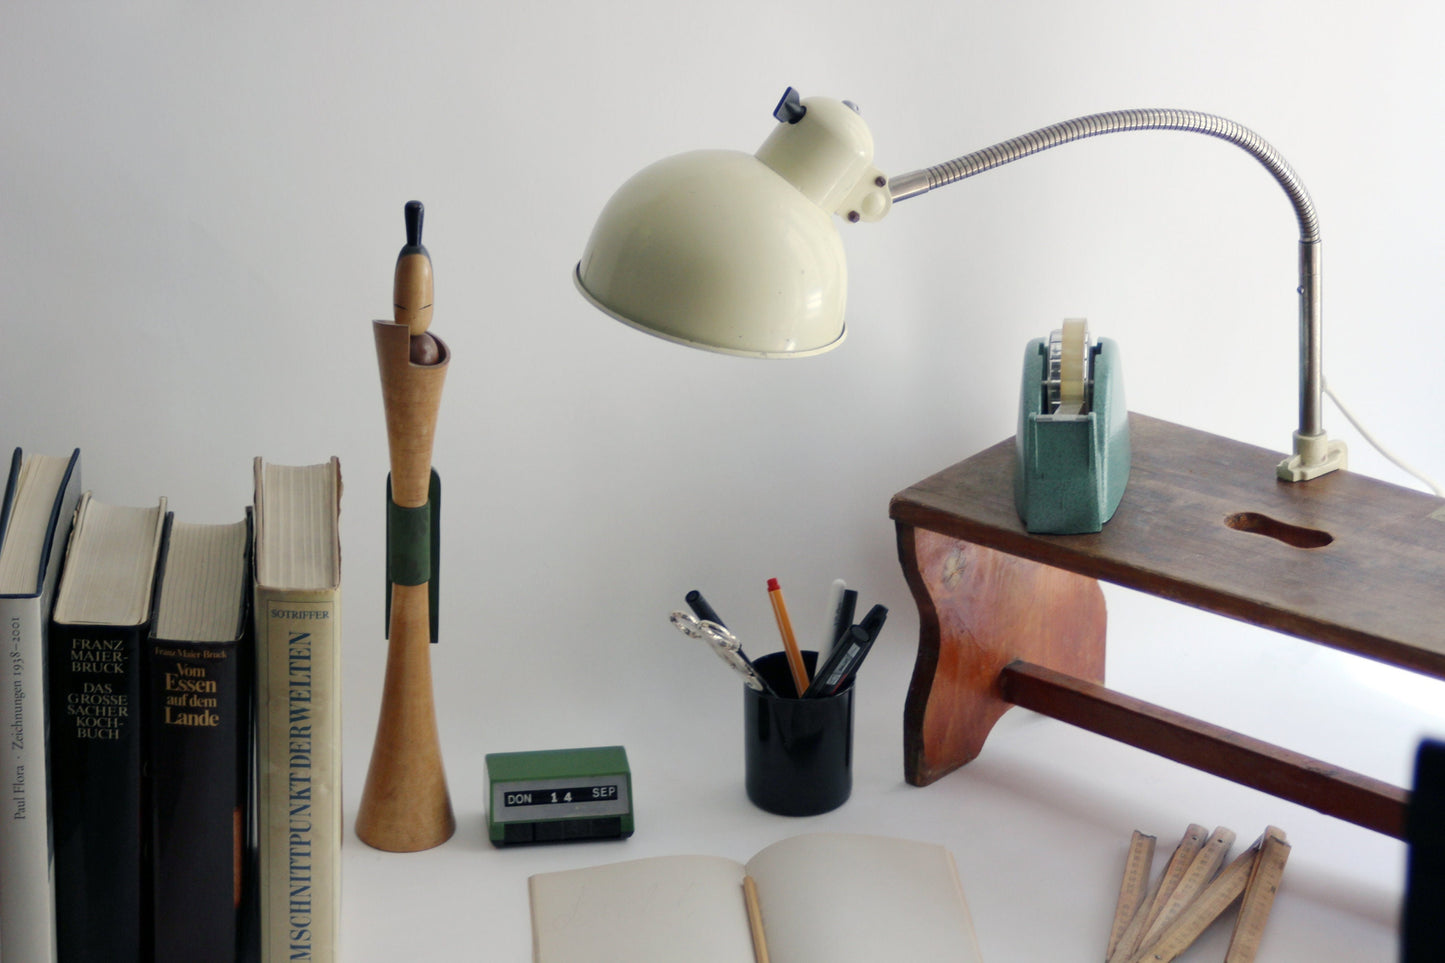 Christian Dell for Koranda gooseneck beige vintage clamp lamp - Bauhaus design Mid century design